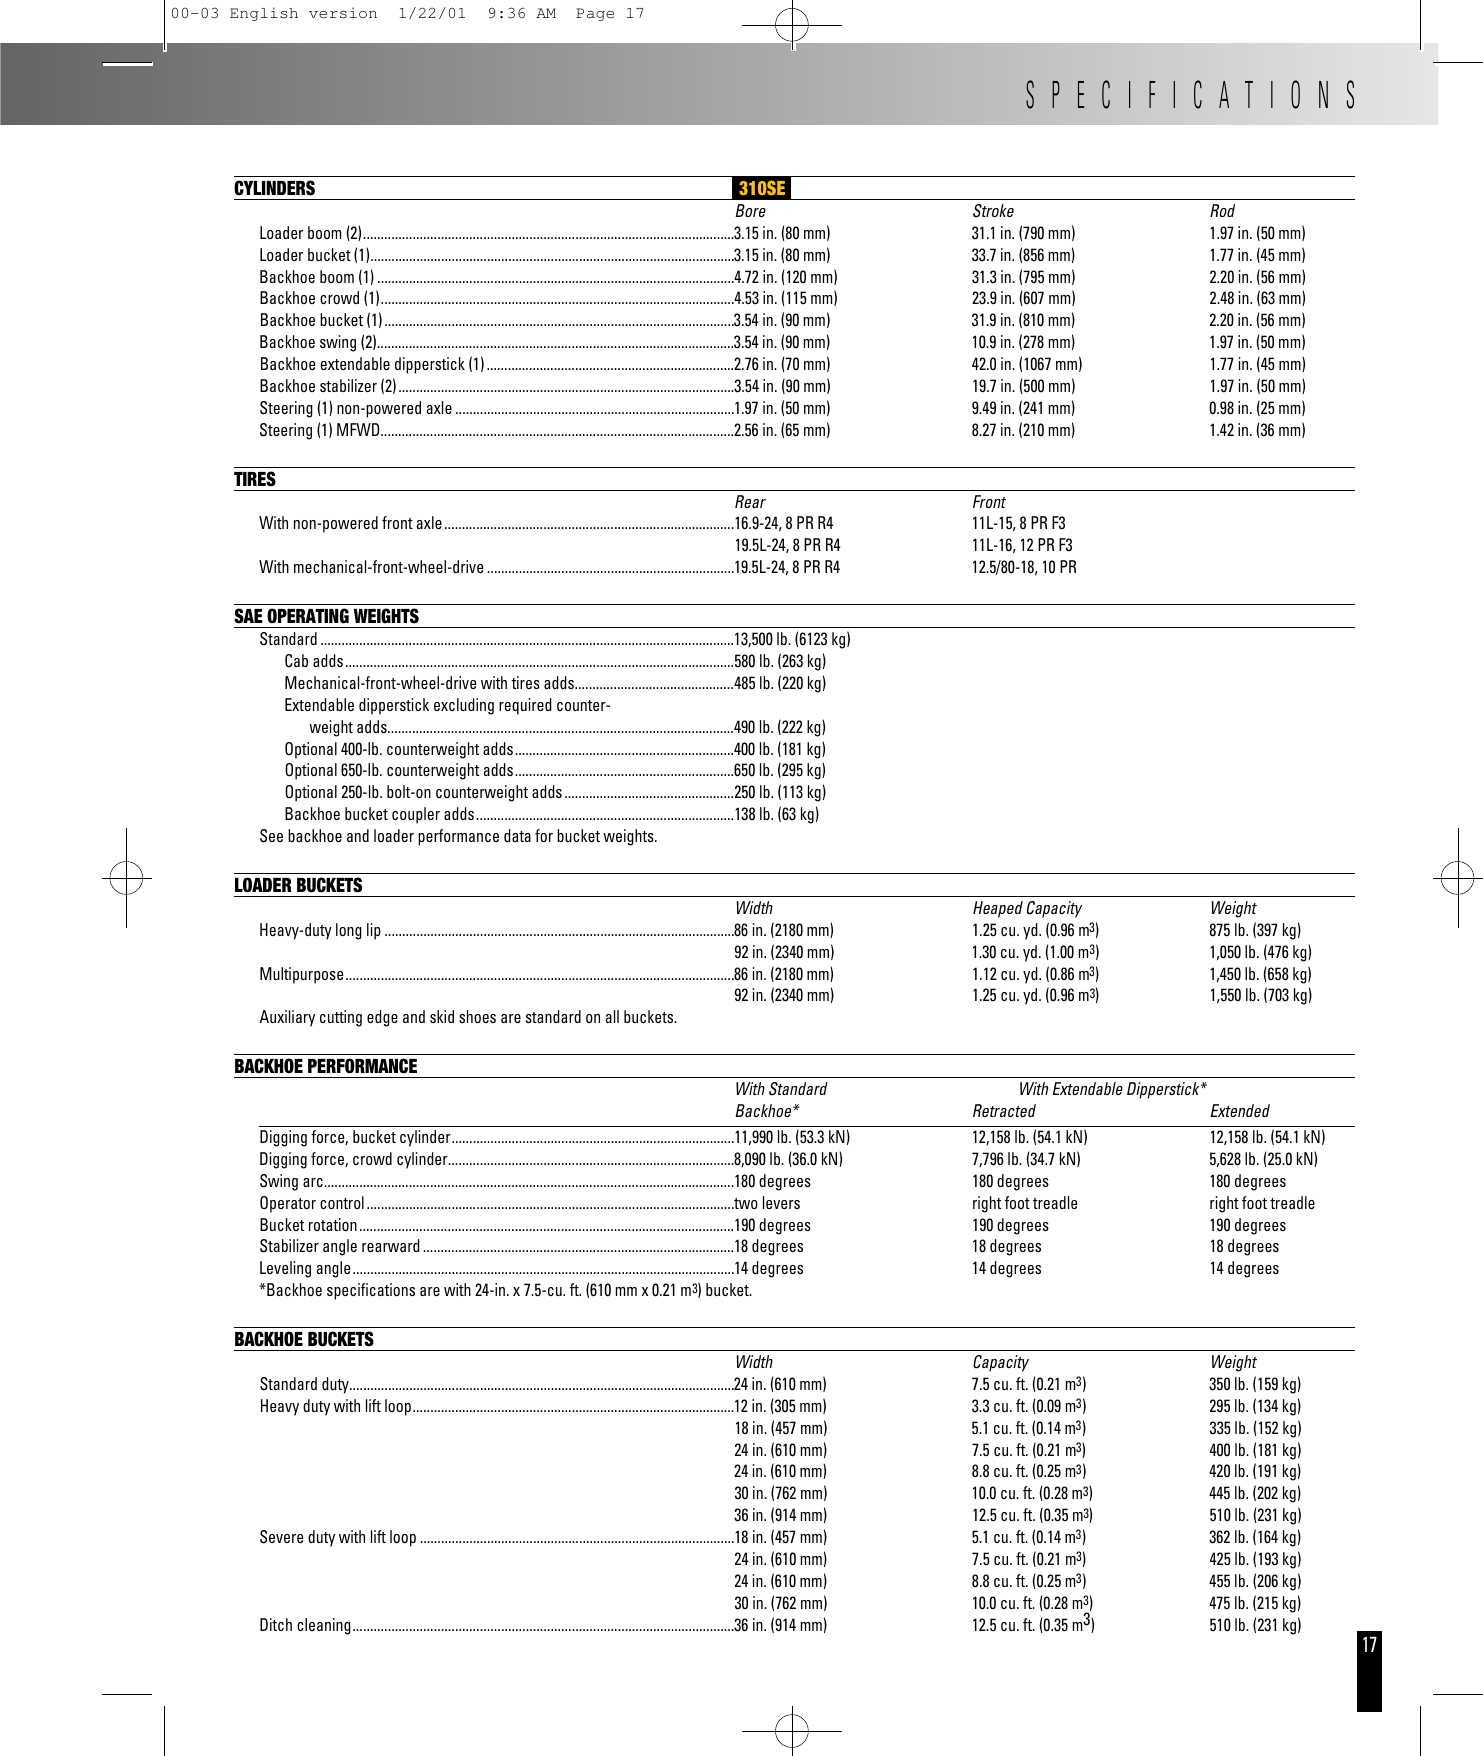 Page 2 of 5 - John-Deere John-Deere-310Se-Users-Manual-  John-deere-310se-users-manual